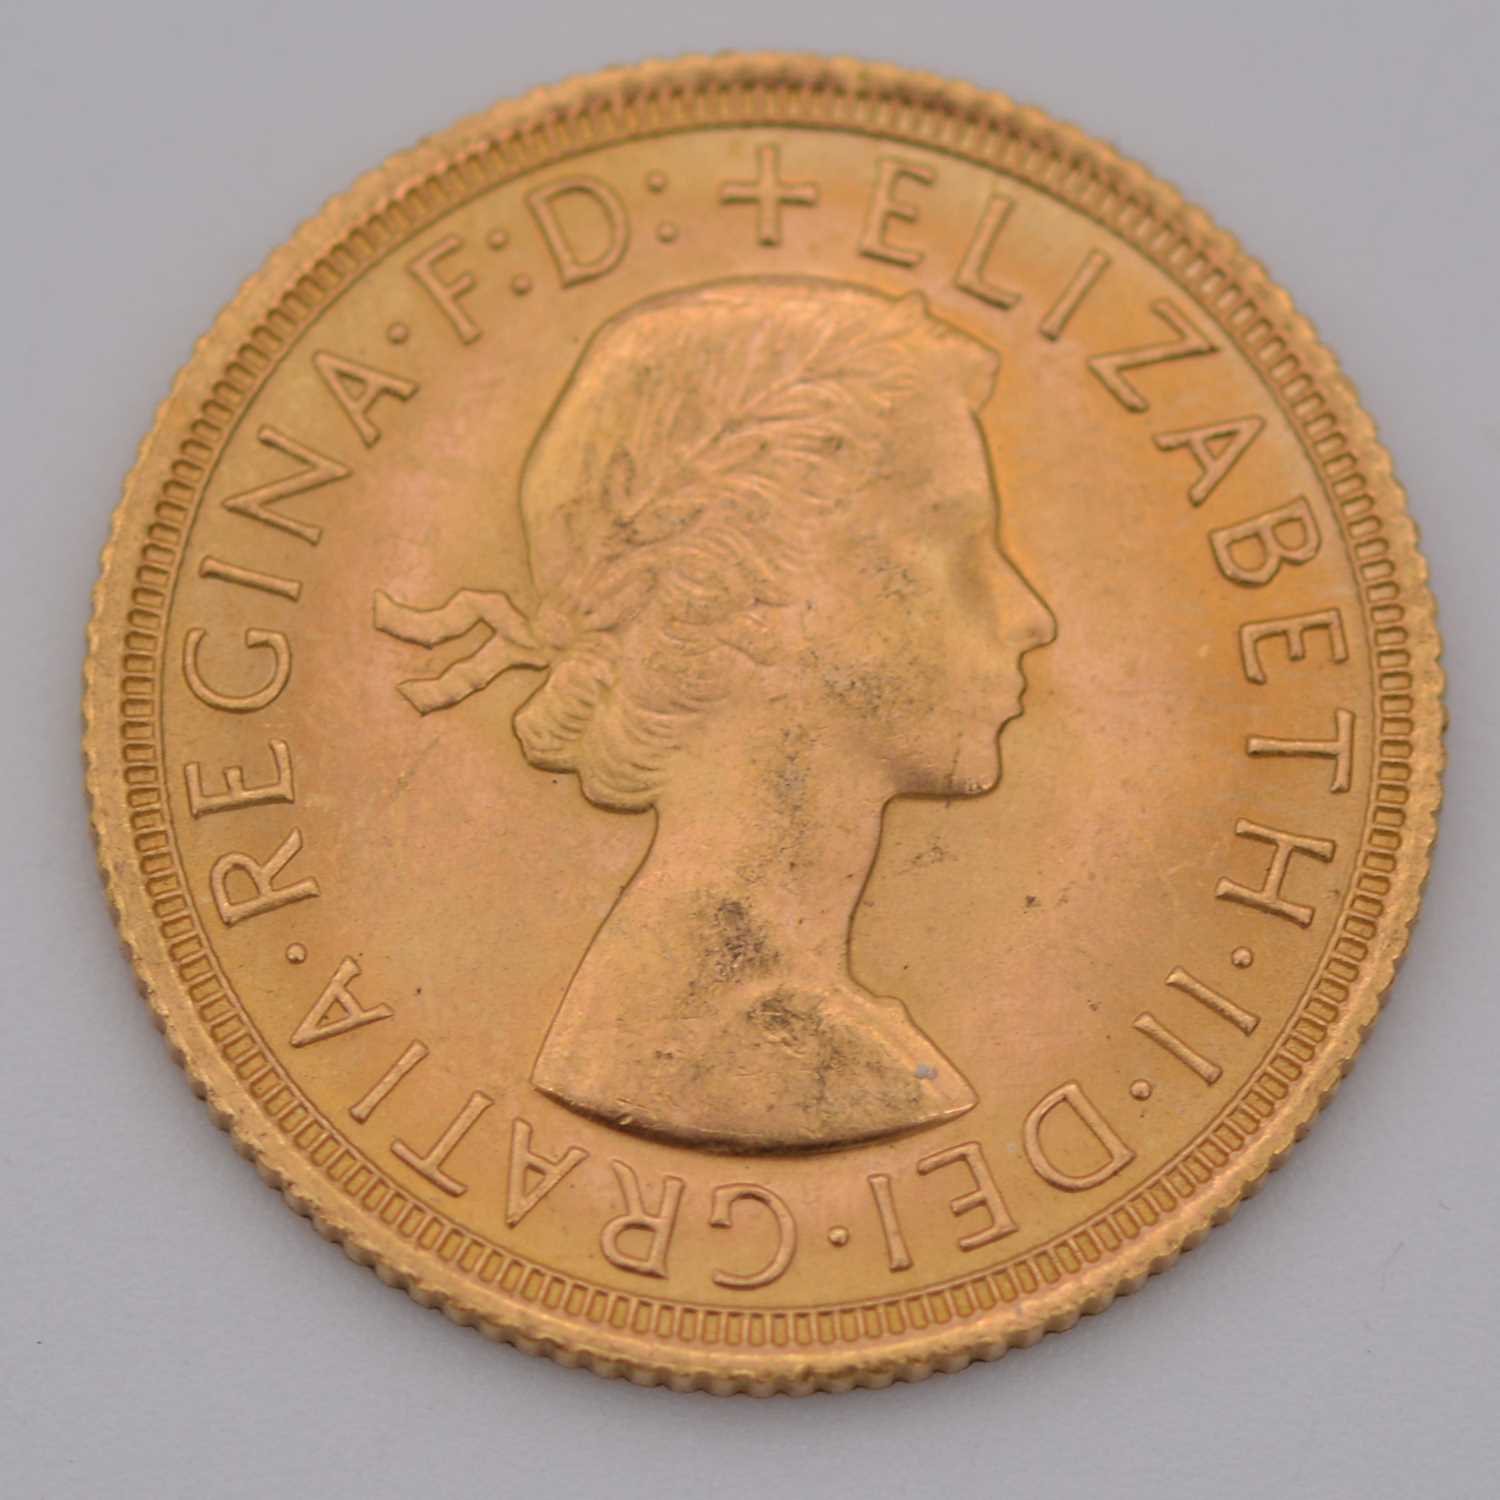 Elizabeth II gold Sovereign coin, 1967, 8g. - Image 2 of 2